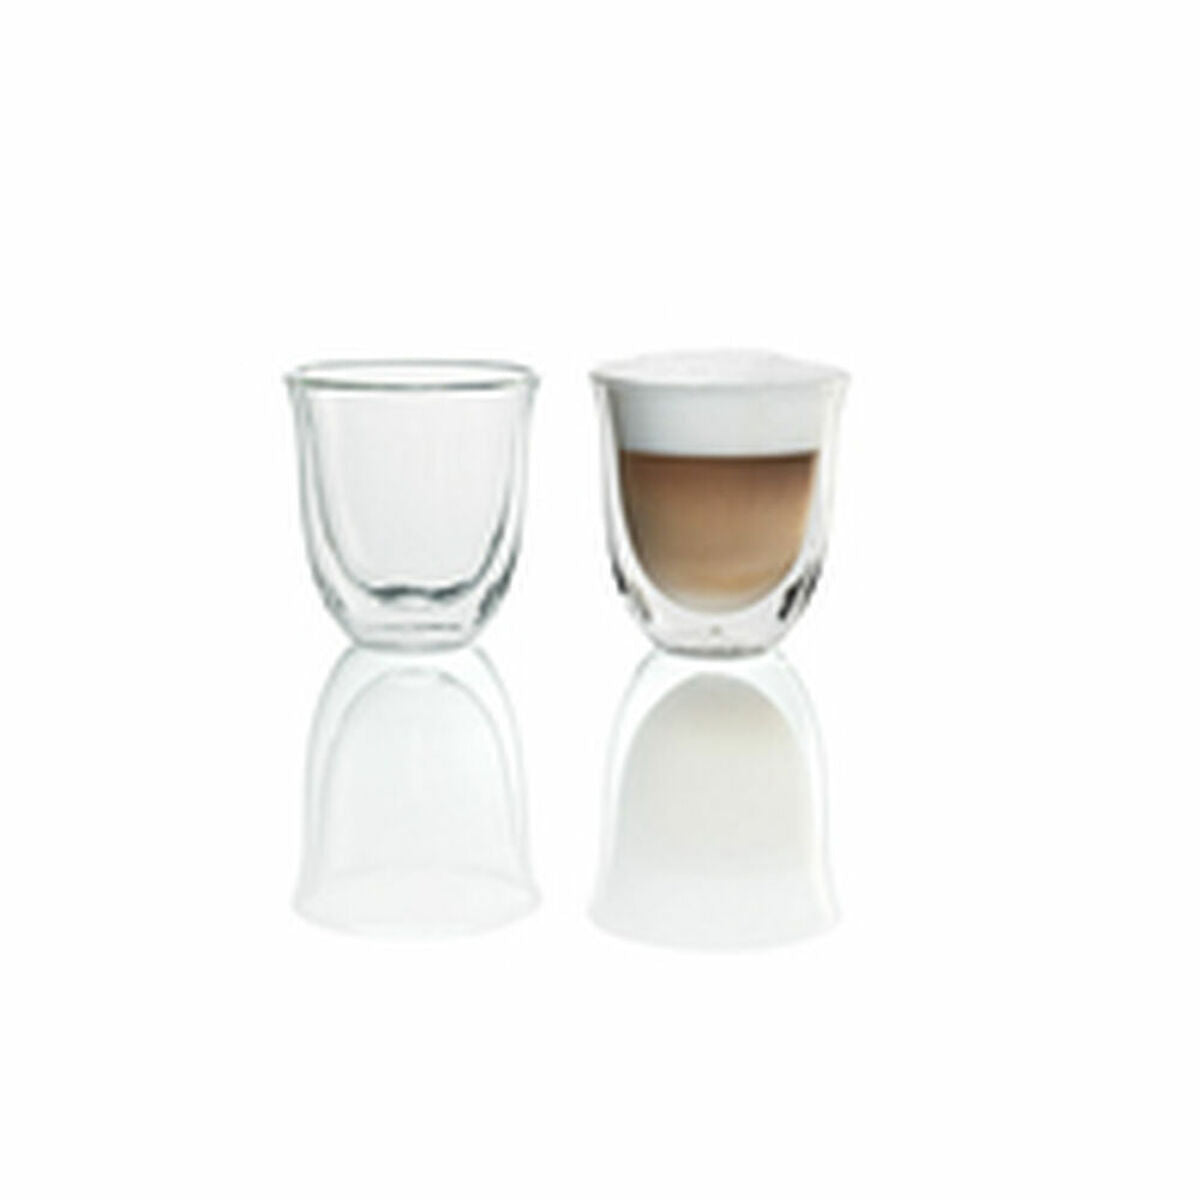 2 Piece Coffee Cup Set De'Longhi 5513214601 Transparent 2 Pieces